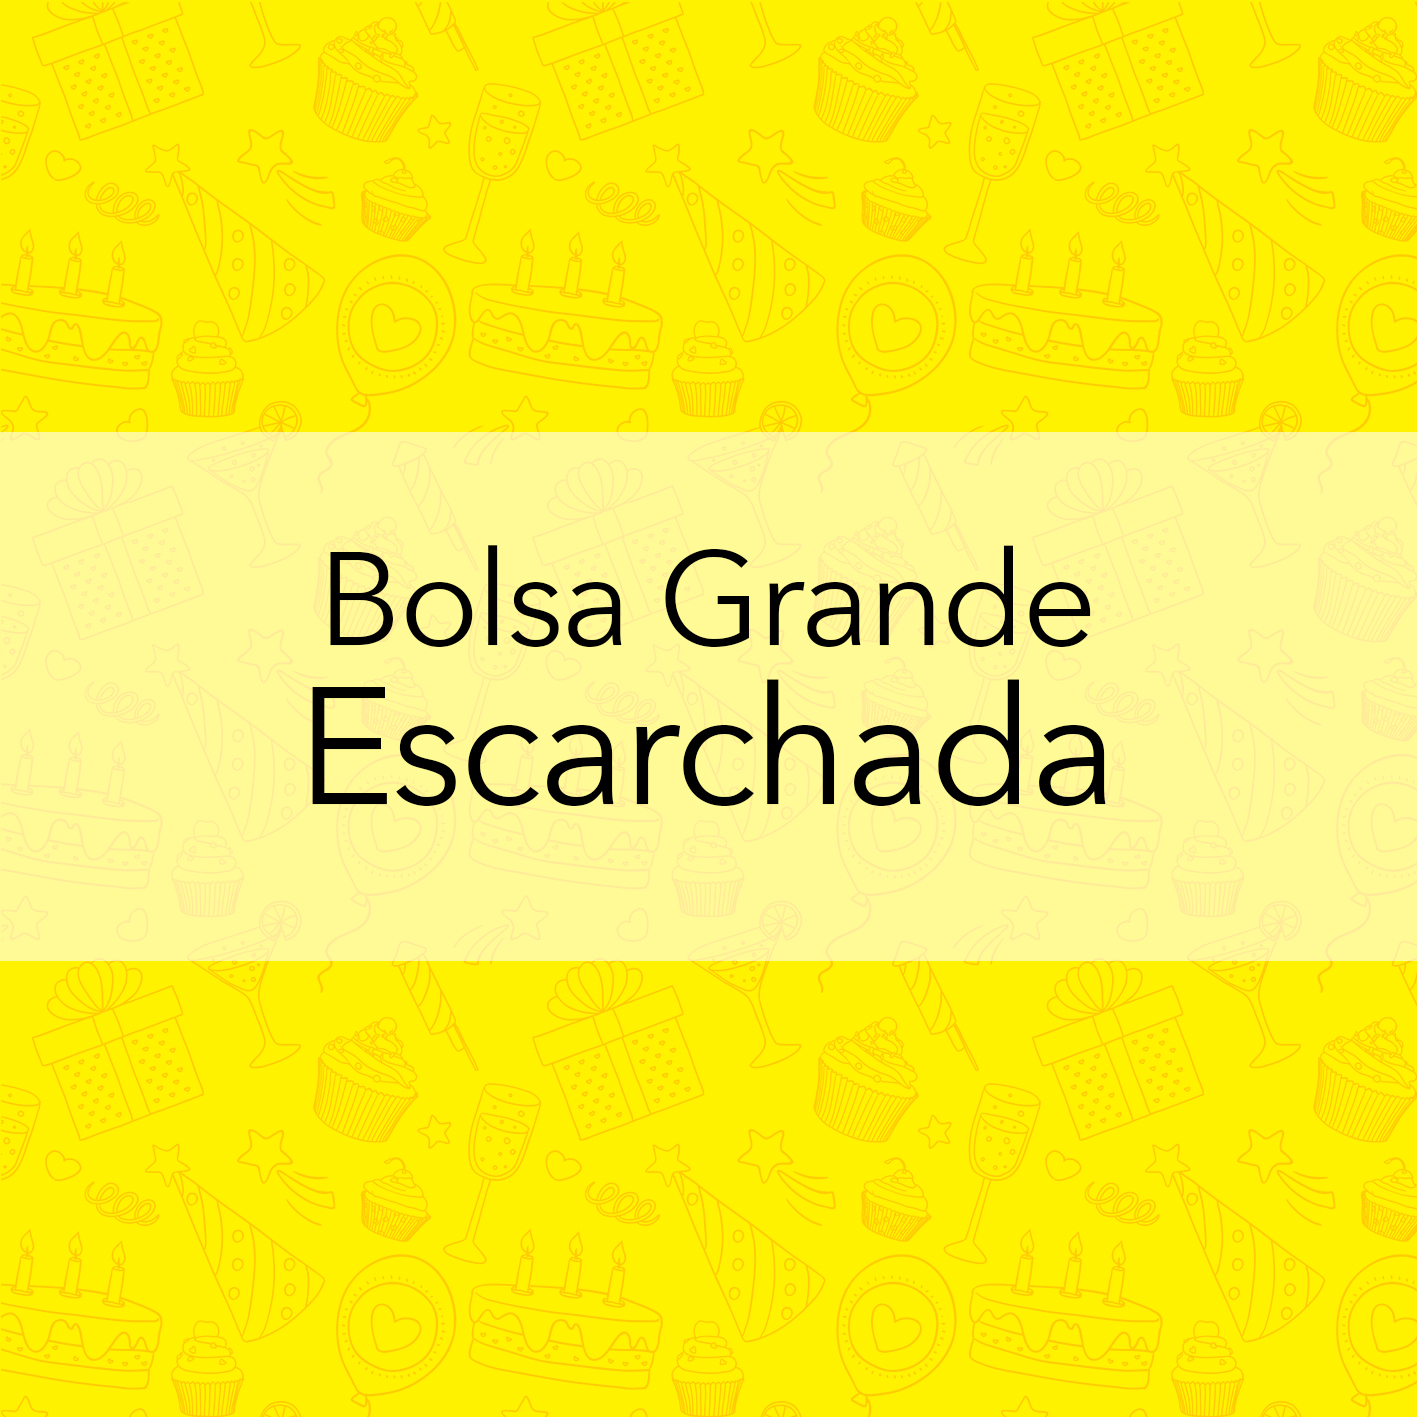 BOLSA GRANDE ESCARCHADA